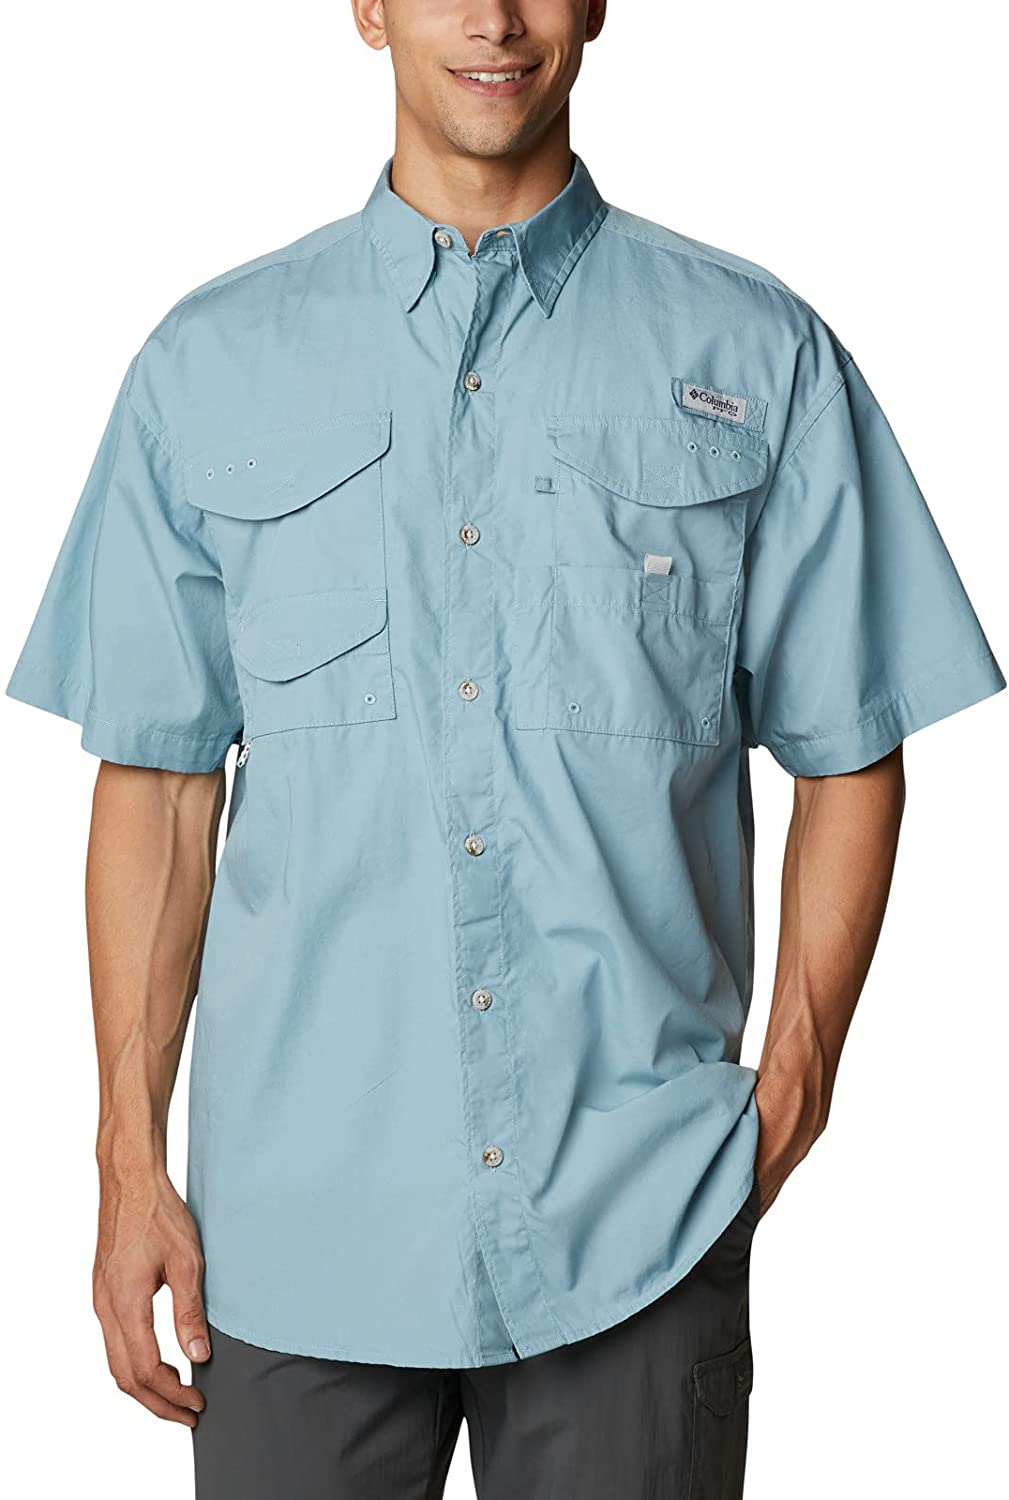 Columbia PFG Bonehead SS vented shirt Mens size 3X Green NEW 